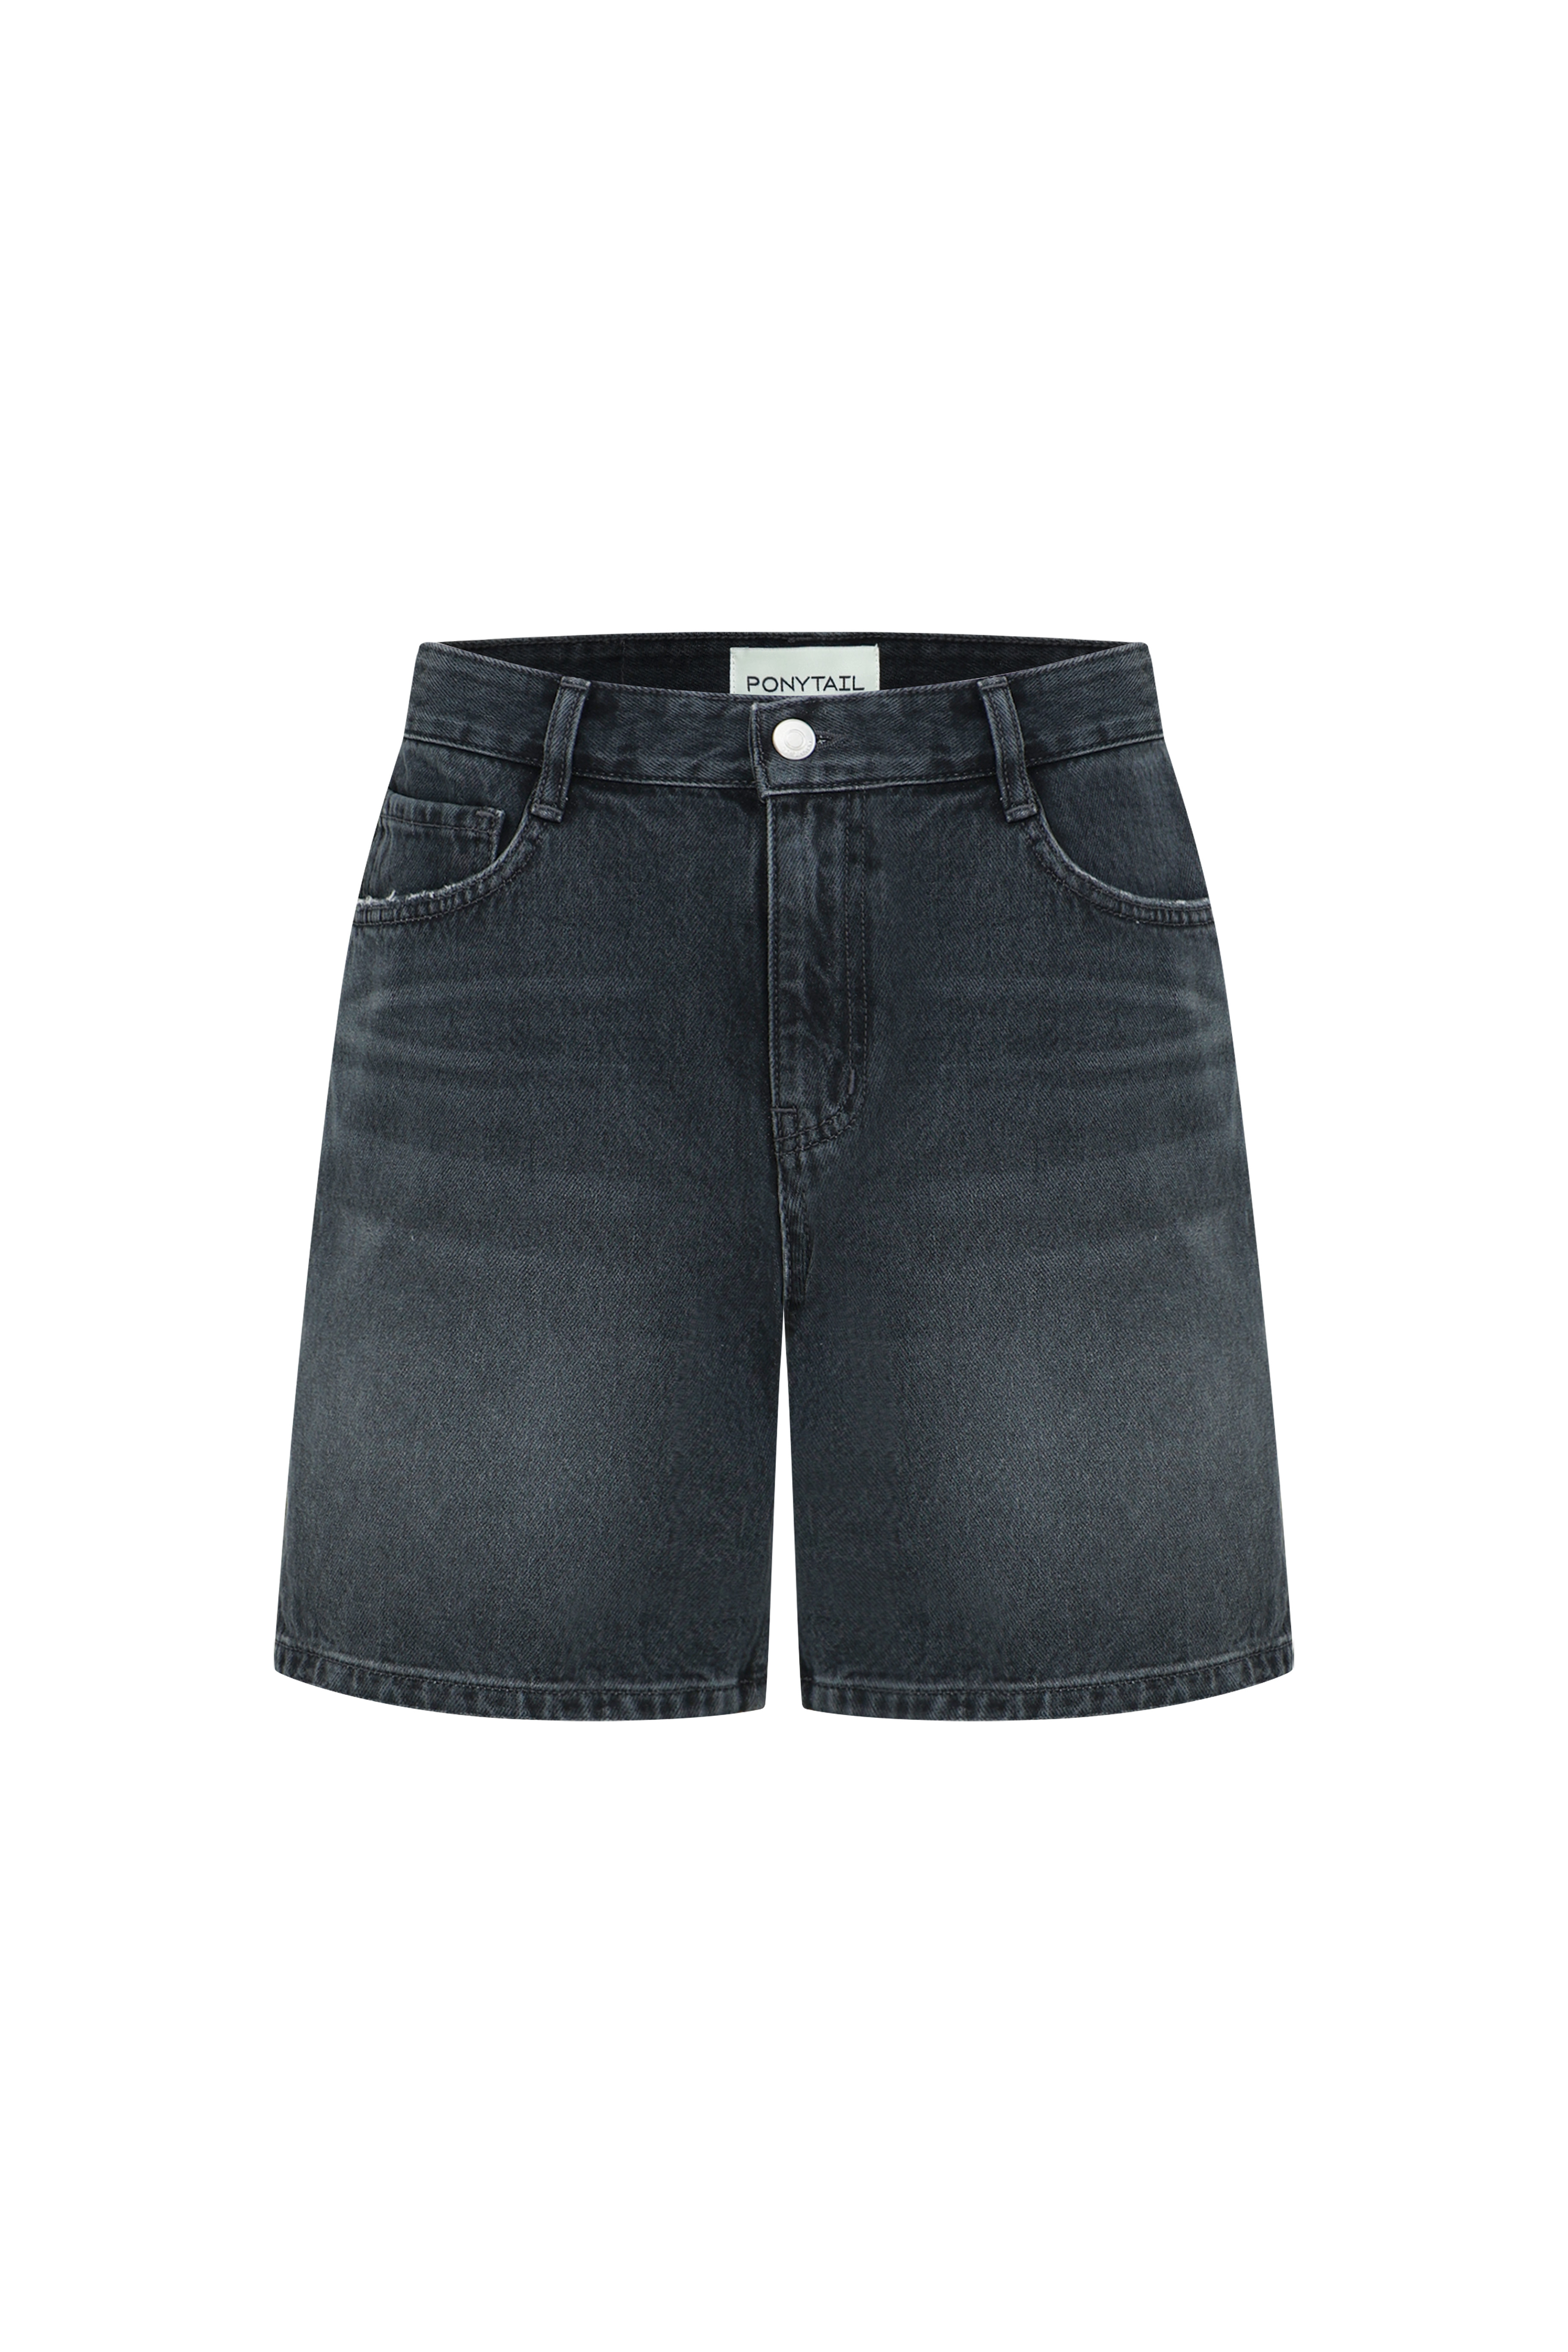 Vintage Washed Bermuda Denim Shorts (Ash BK) - 포니테일